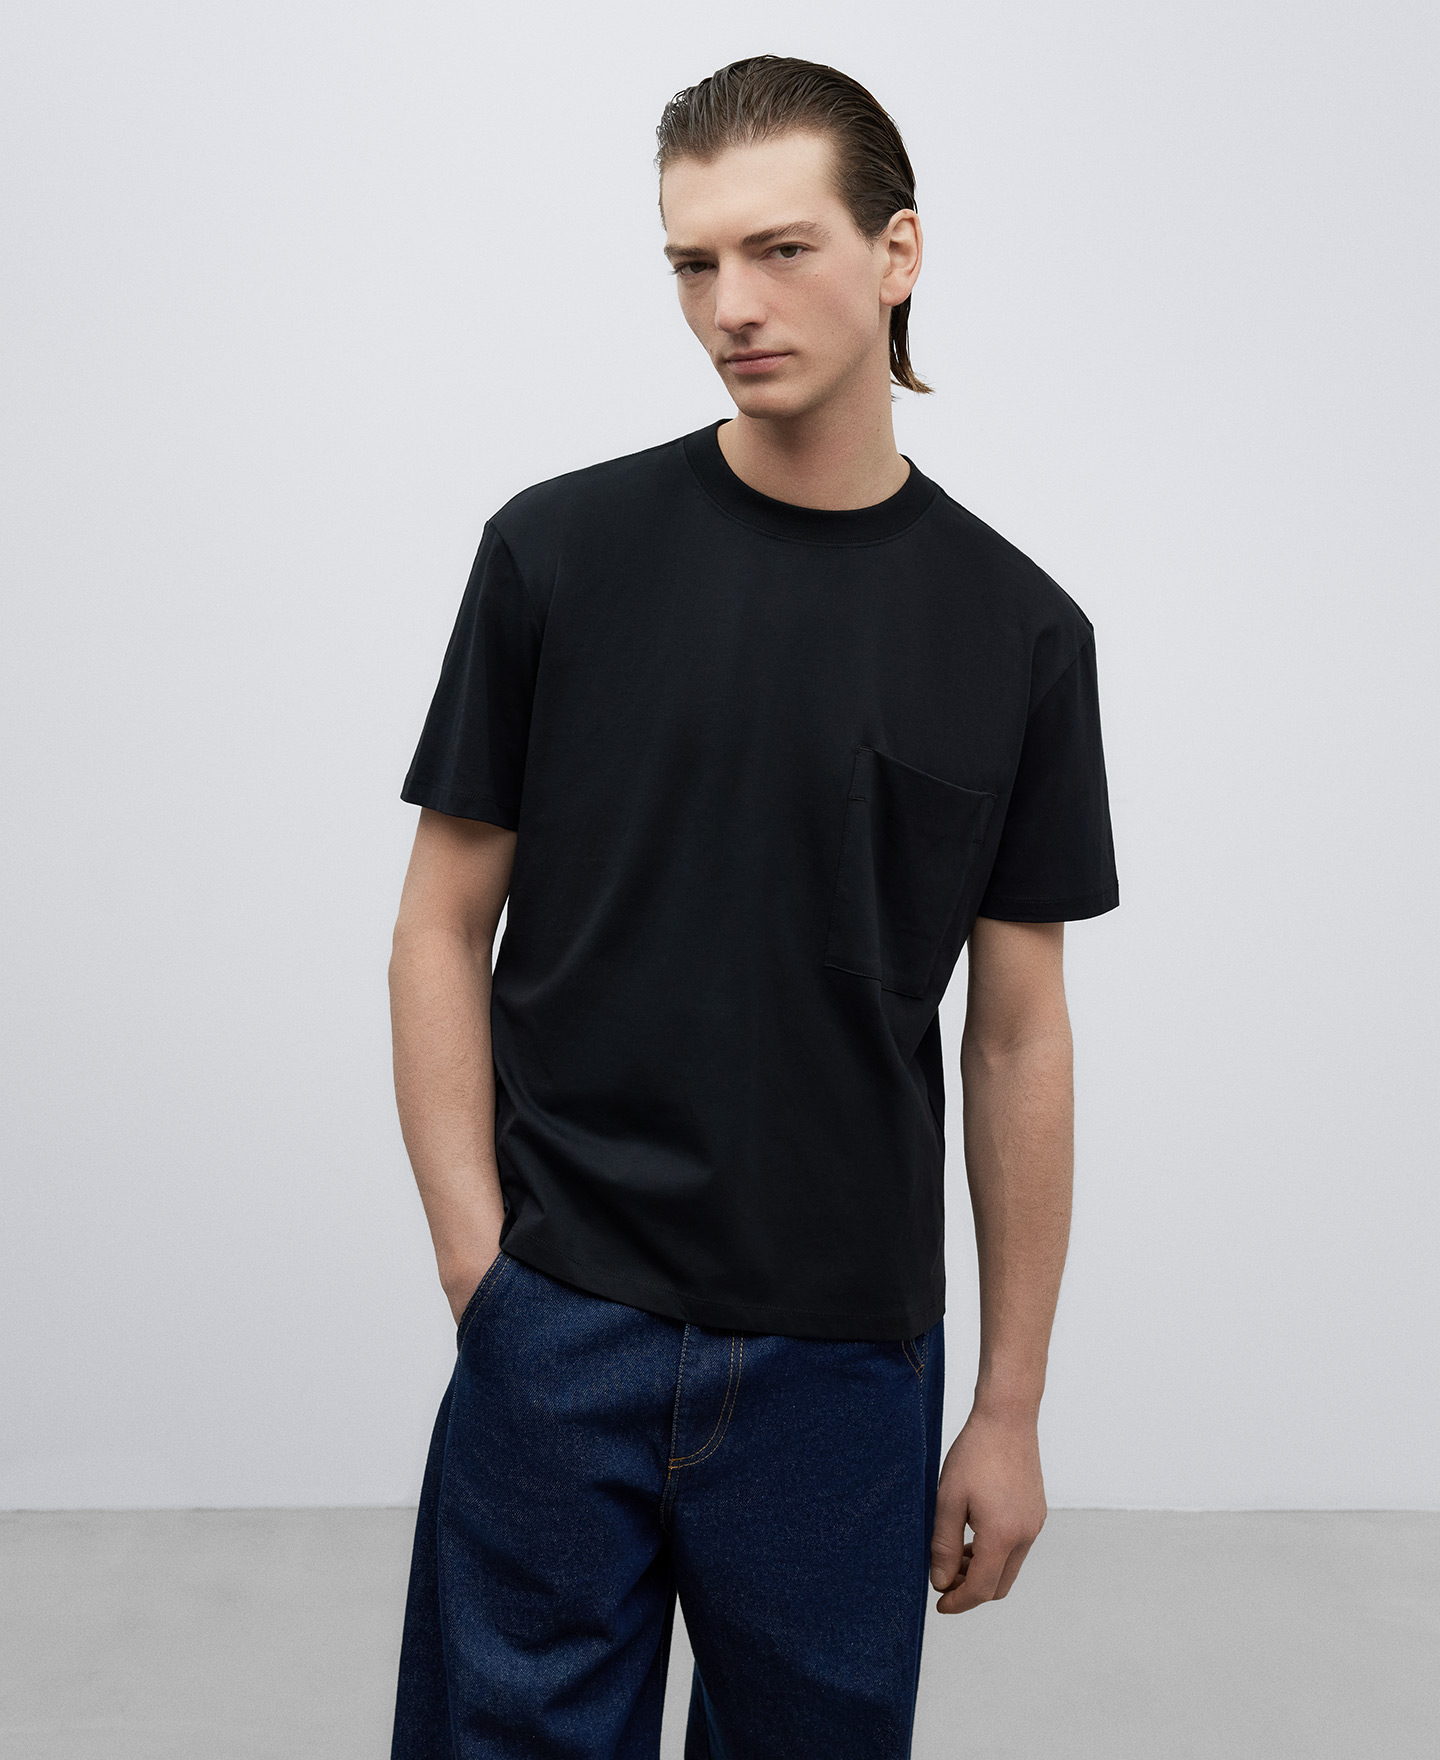 Black cotton T-shirt man | AD Europa